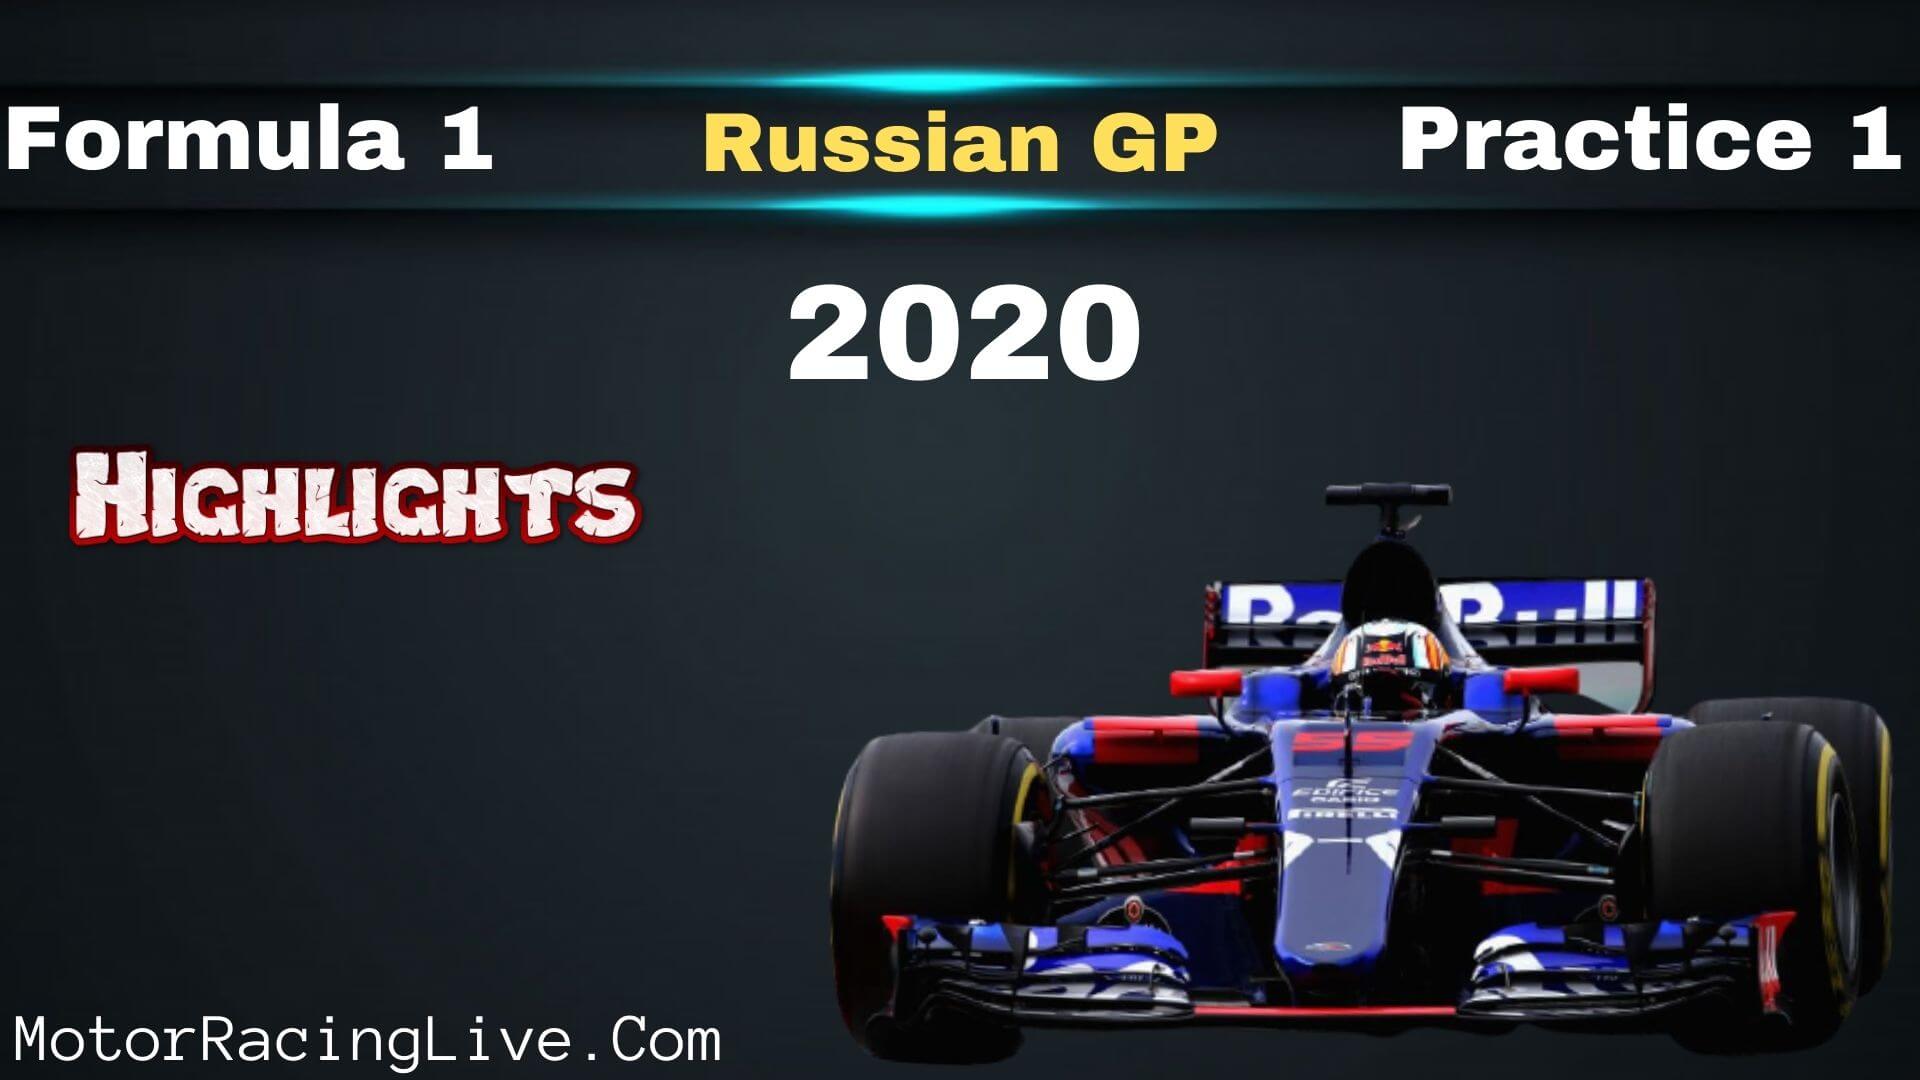 F1 Practice 1 Russian GP Race 2020 Highlights